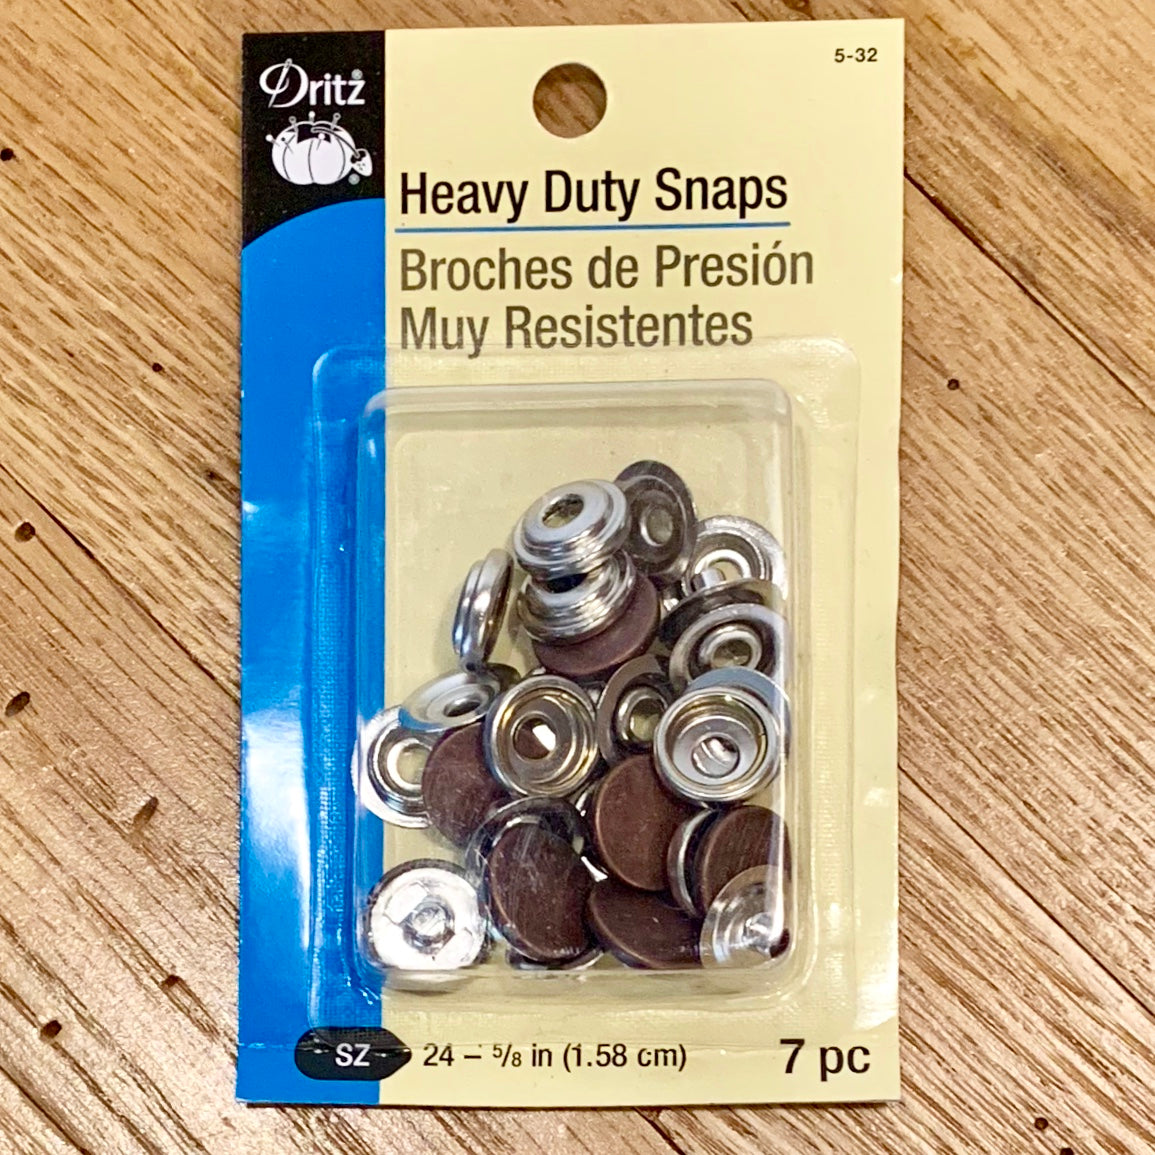 Dritz Heavy Duty Snaps 5/8in Nickel Includes Snaps & Tools